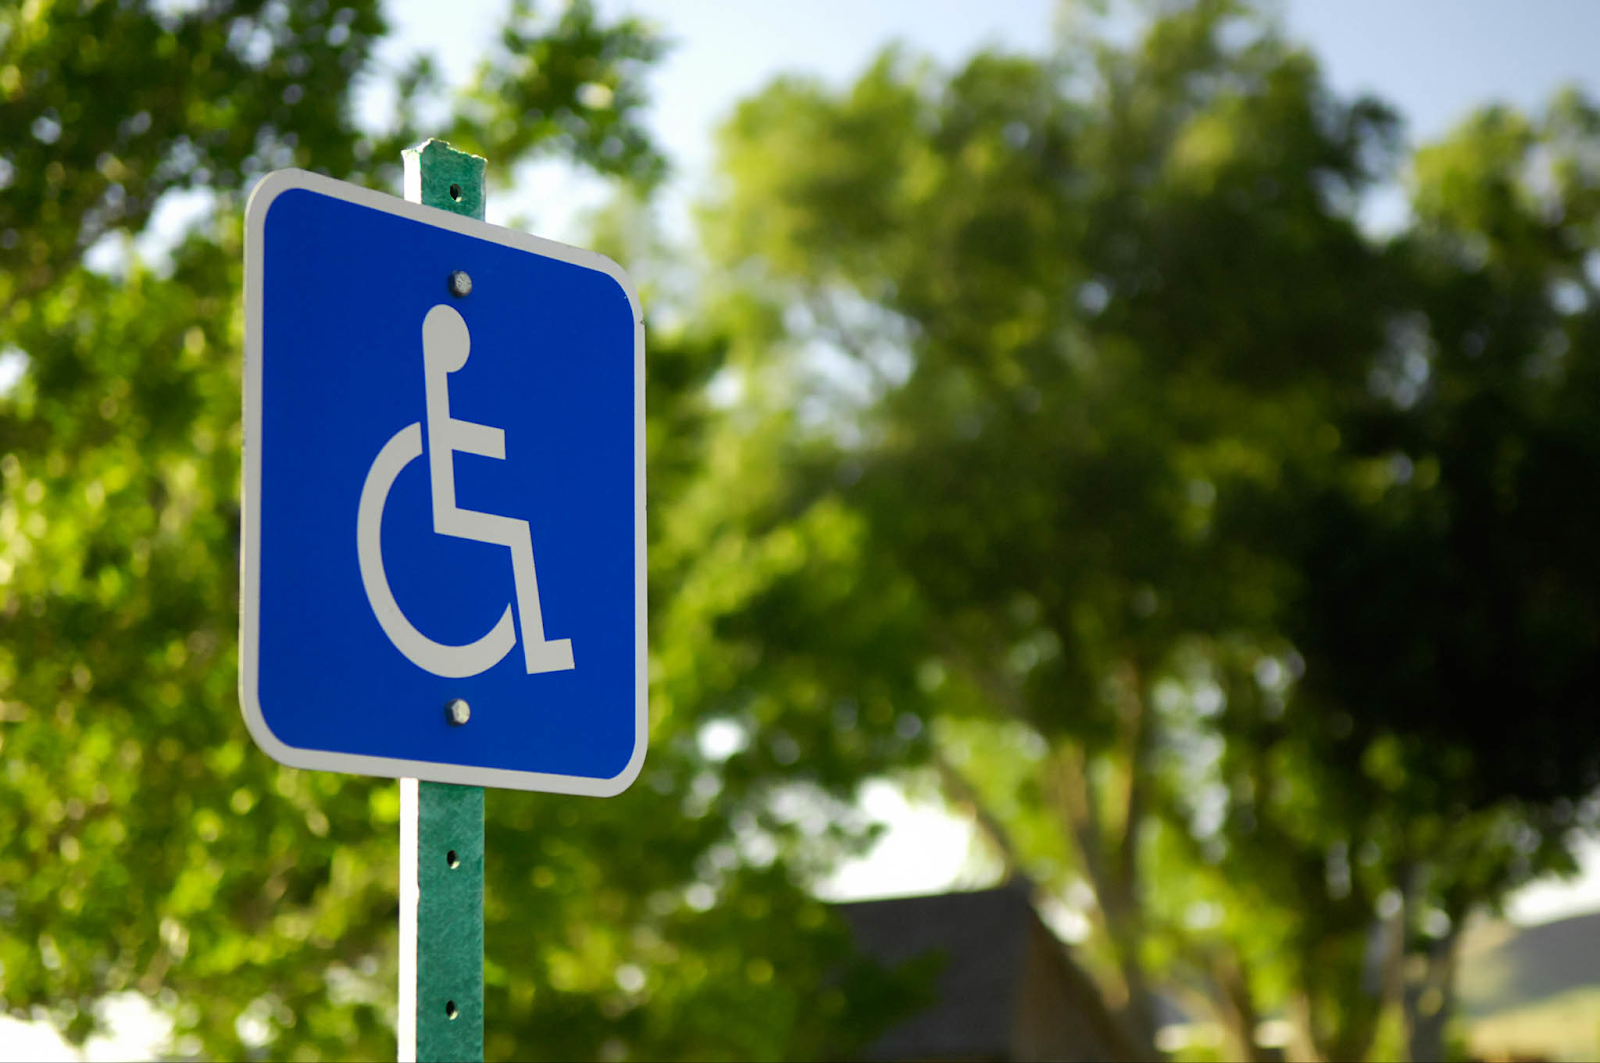 Disabled parking sign